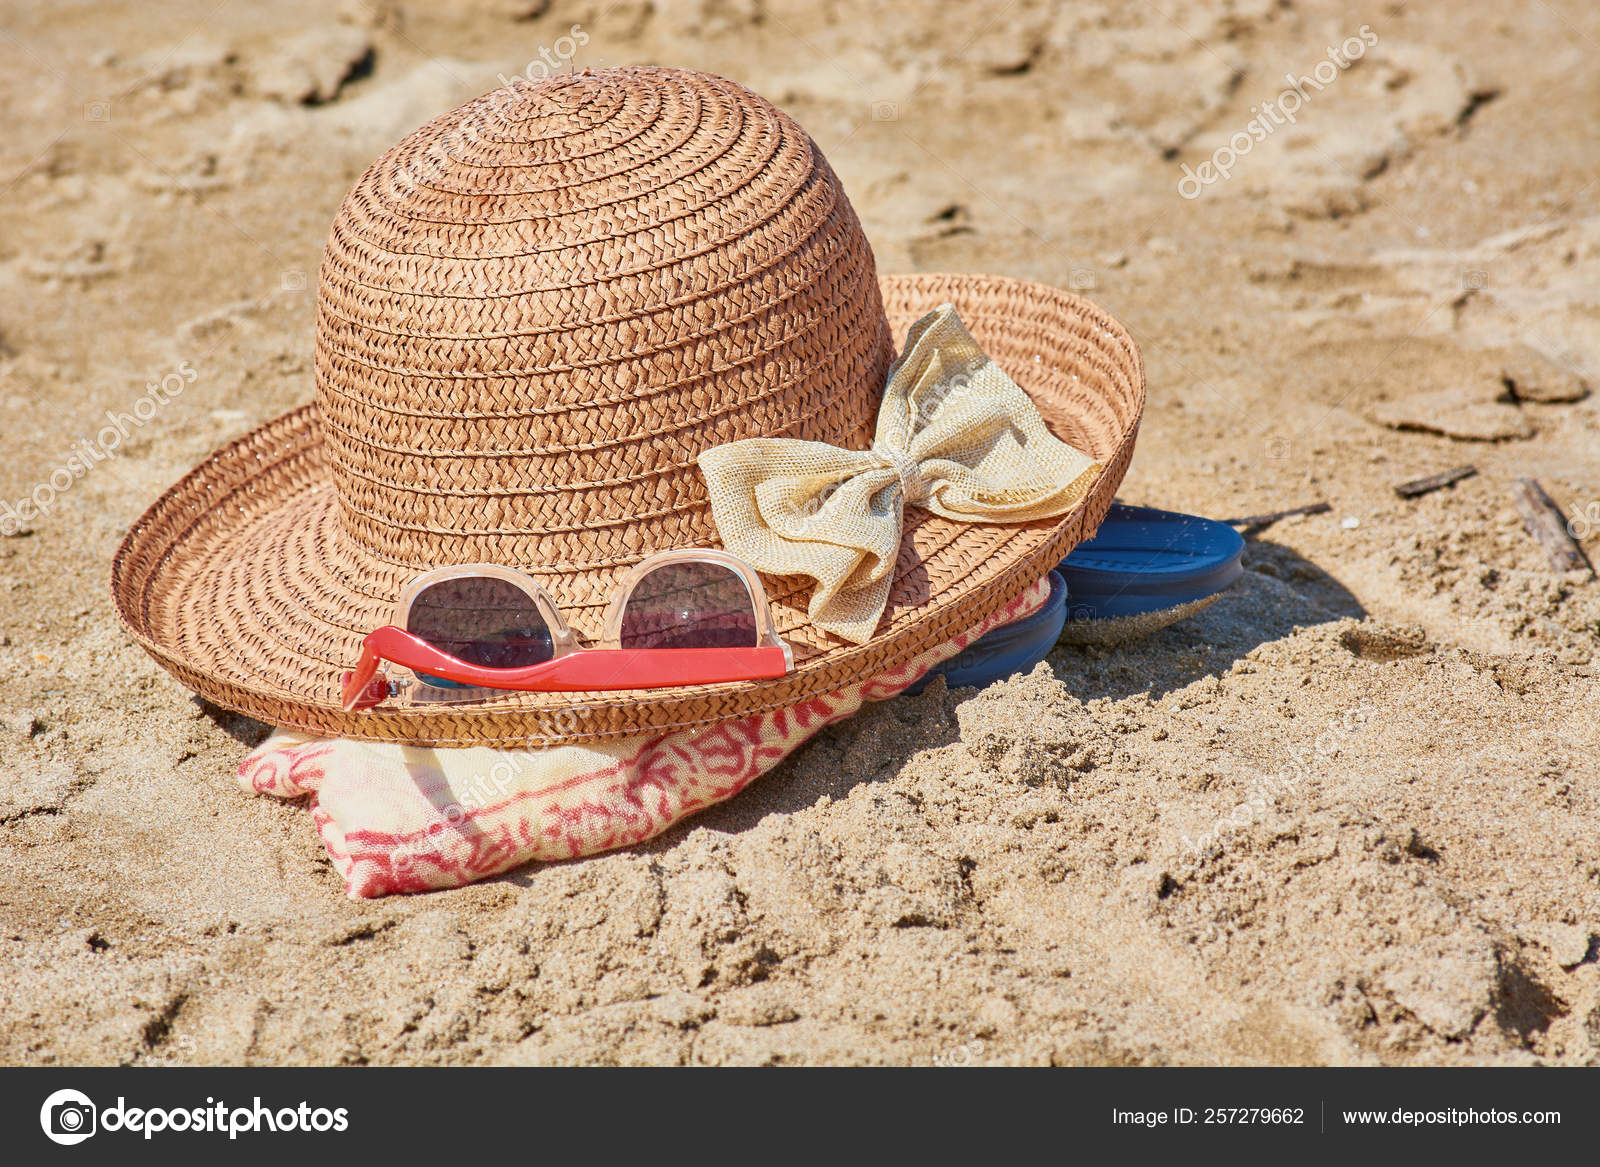 https://st4.depositphotos.com/24667772/25727/i/1600/depositphotos_257279662-stock-photo-womens-sun-hat-sunglasses-lies.jpg